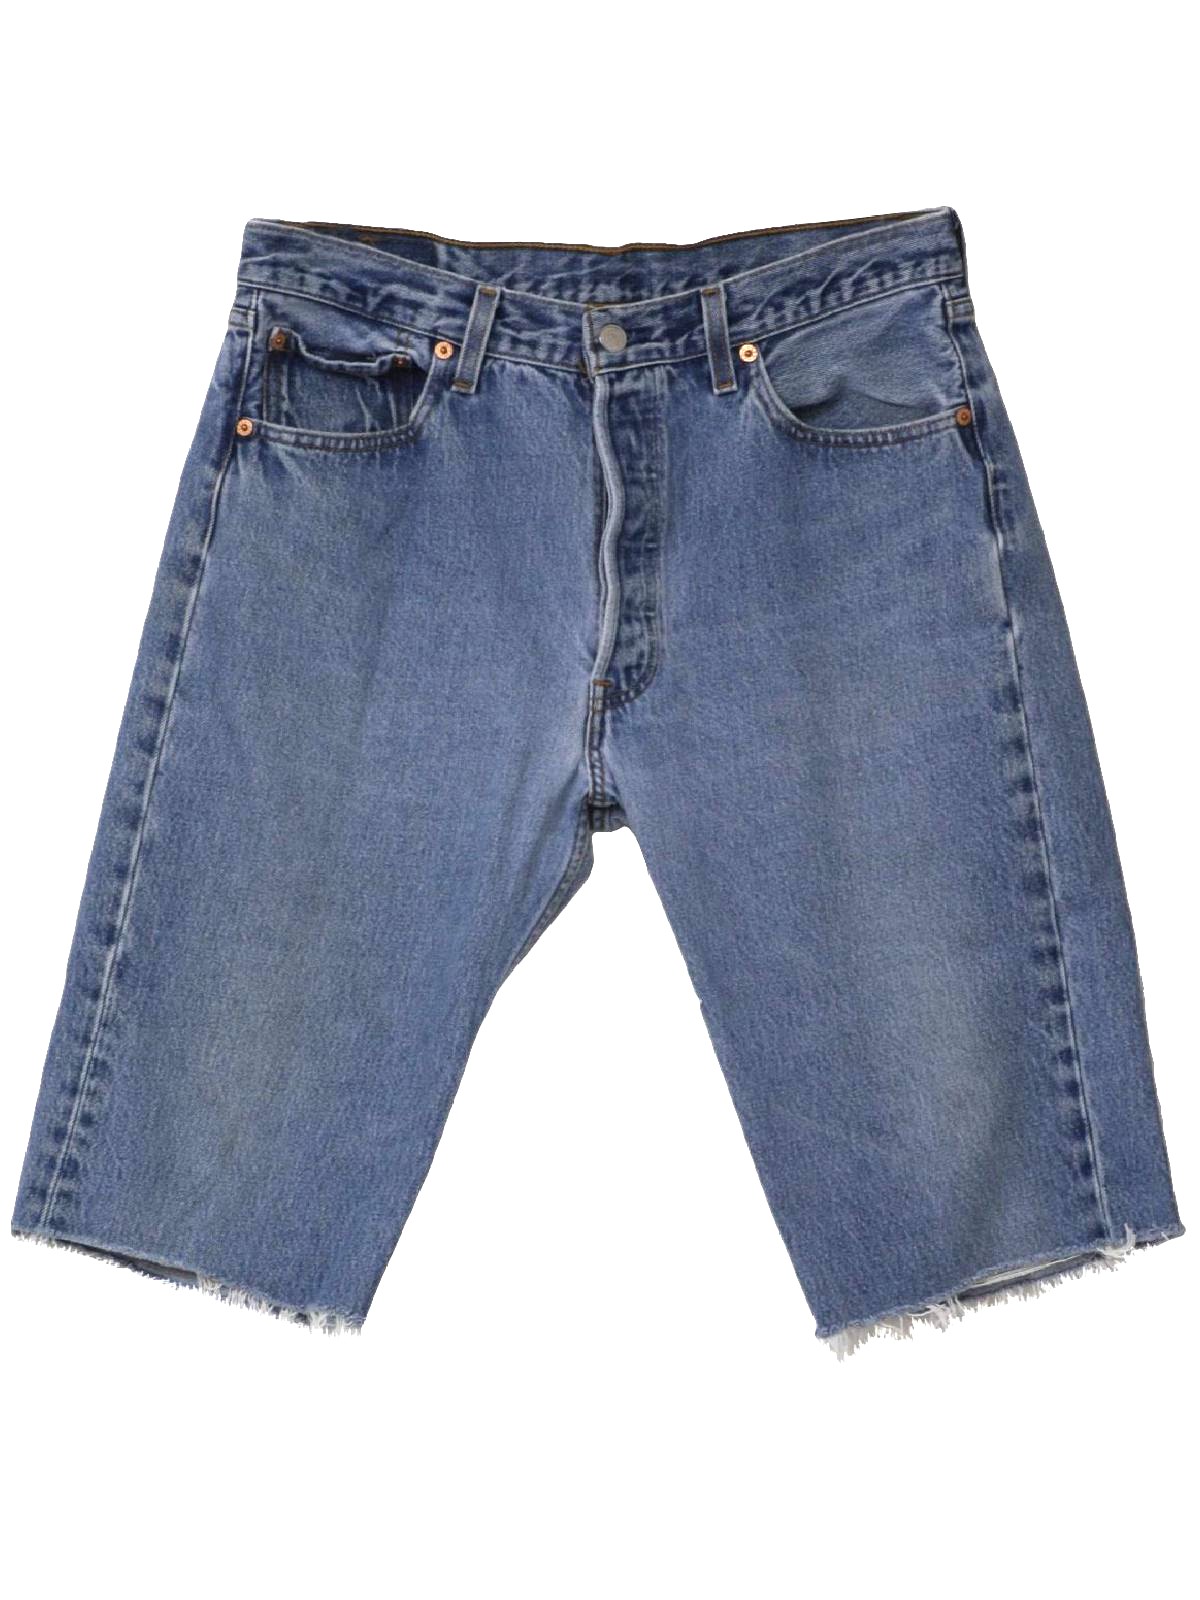 90s Shorts (Levis 501): 90s -Levis 501- Mens well worn medium blue ...